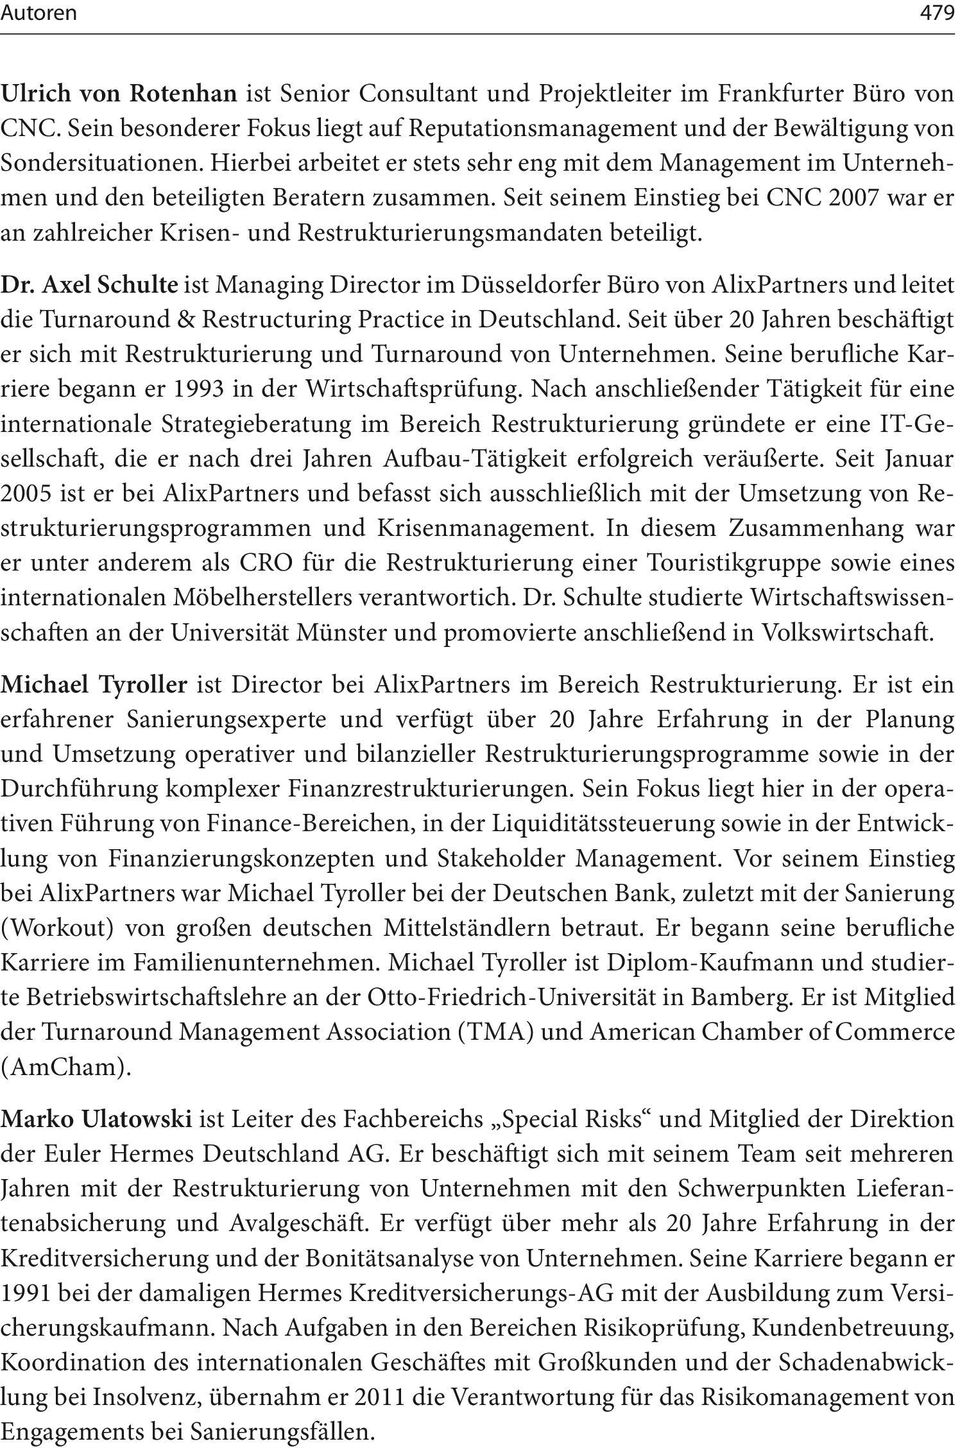 Axel Schulte ist Maagig Director im Düsseldorfer Büro vo AlixParters ud leitet die Turaroud & Restructurig Practice i Deutschlad.